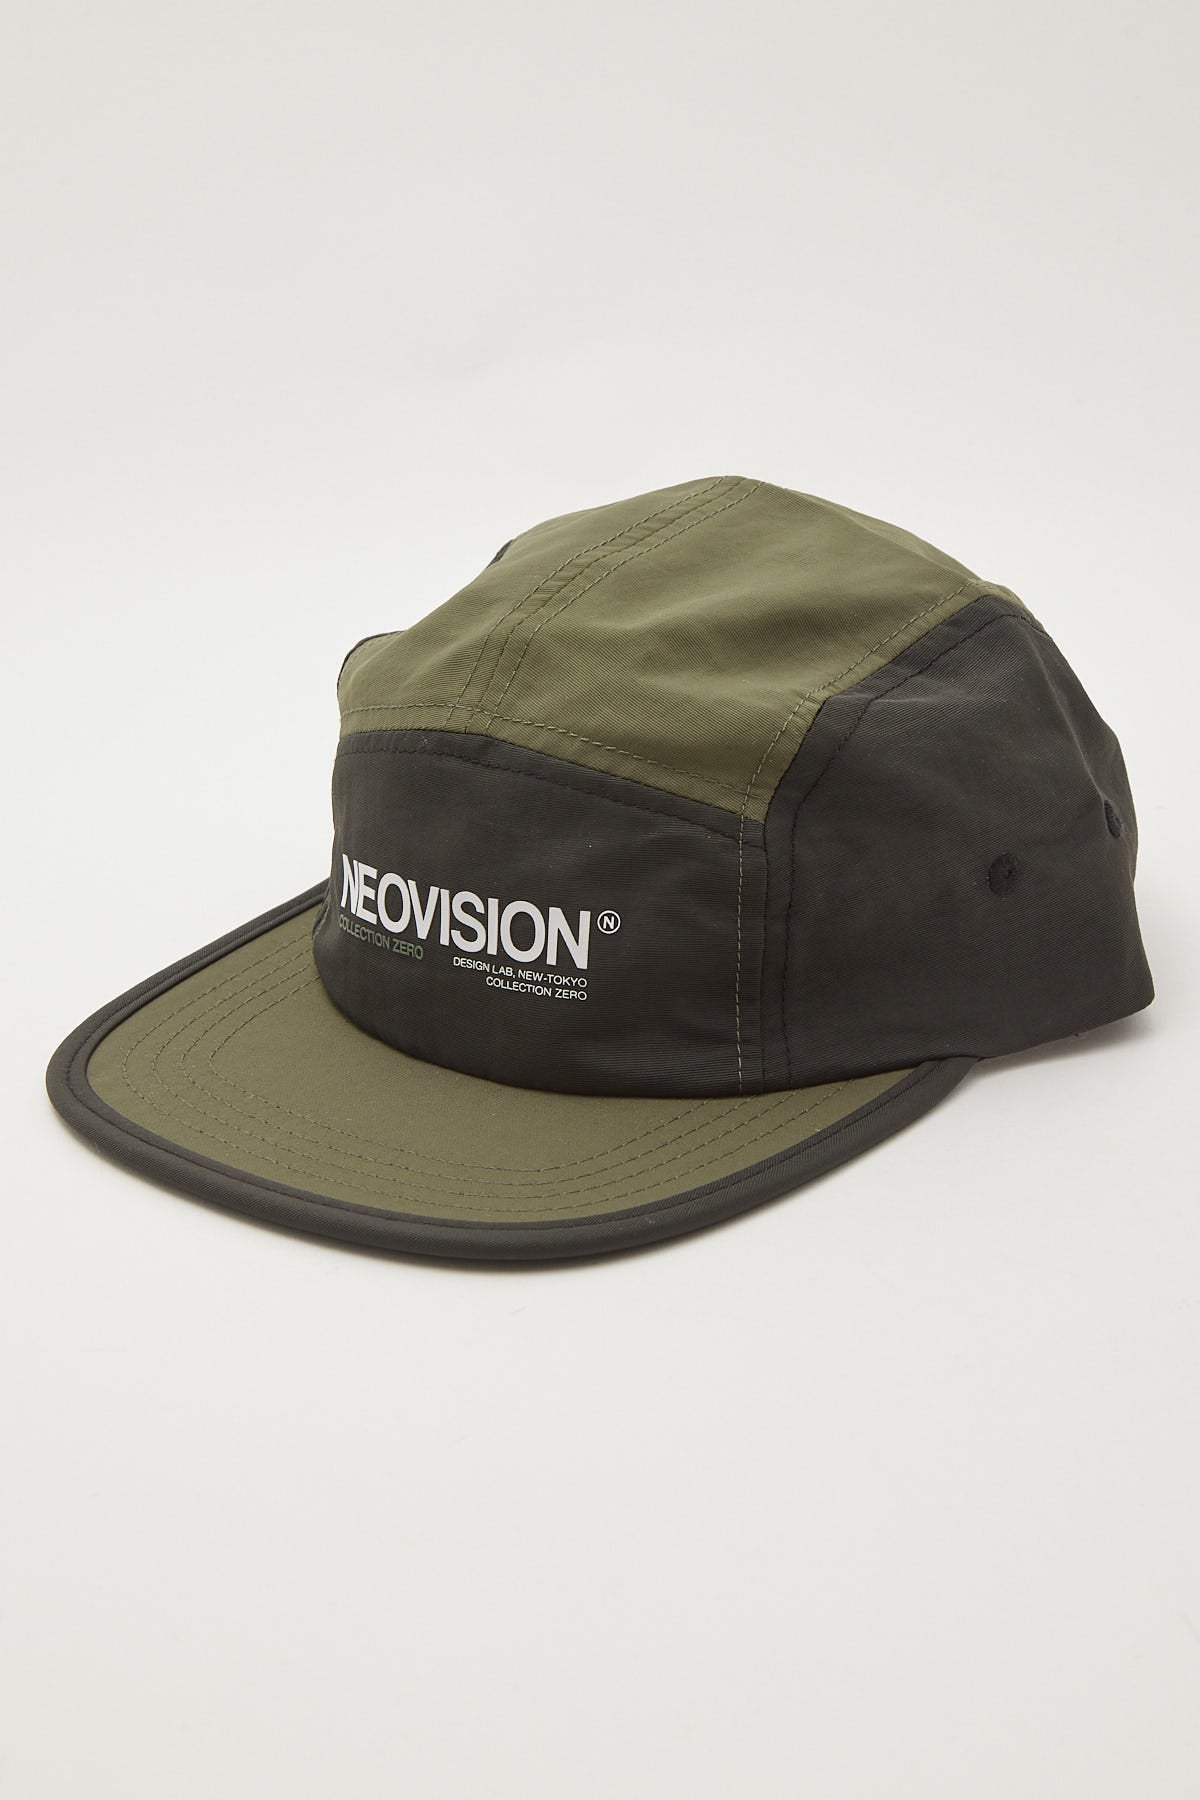 Neovision Curation Two Tone 5 Panel Cap Black/Khaki